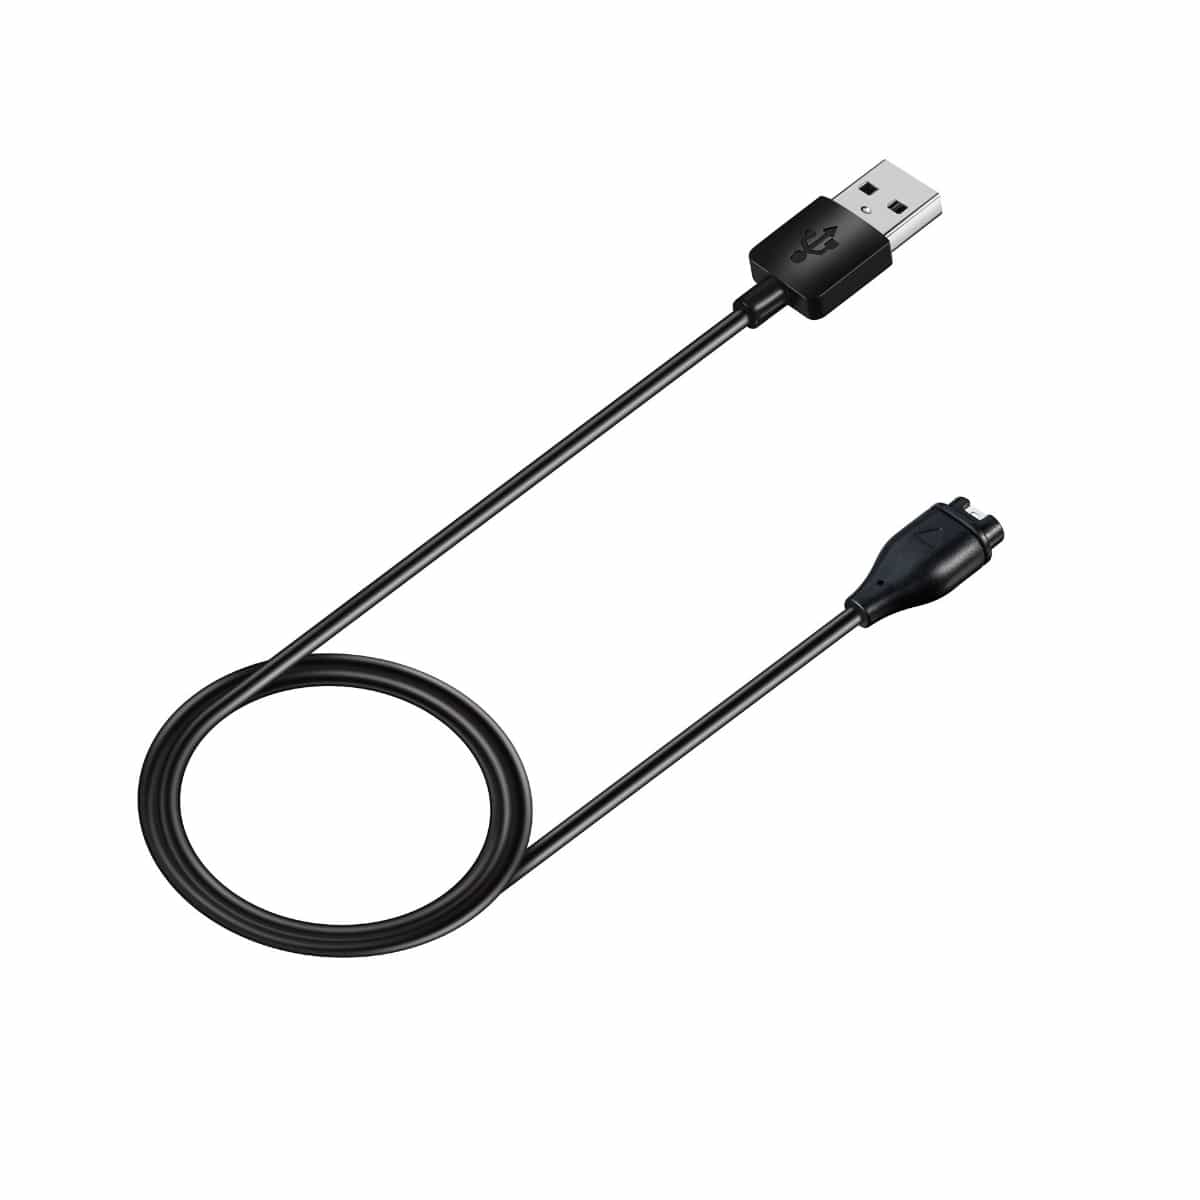 Original Garmin USB Charger DATA SYNC charging Clip for Forerunner 10 15  watch